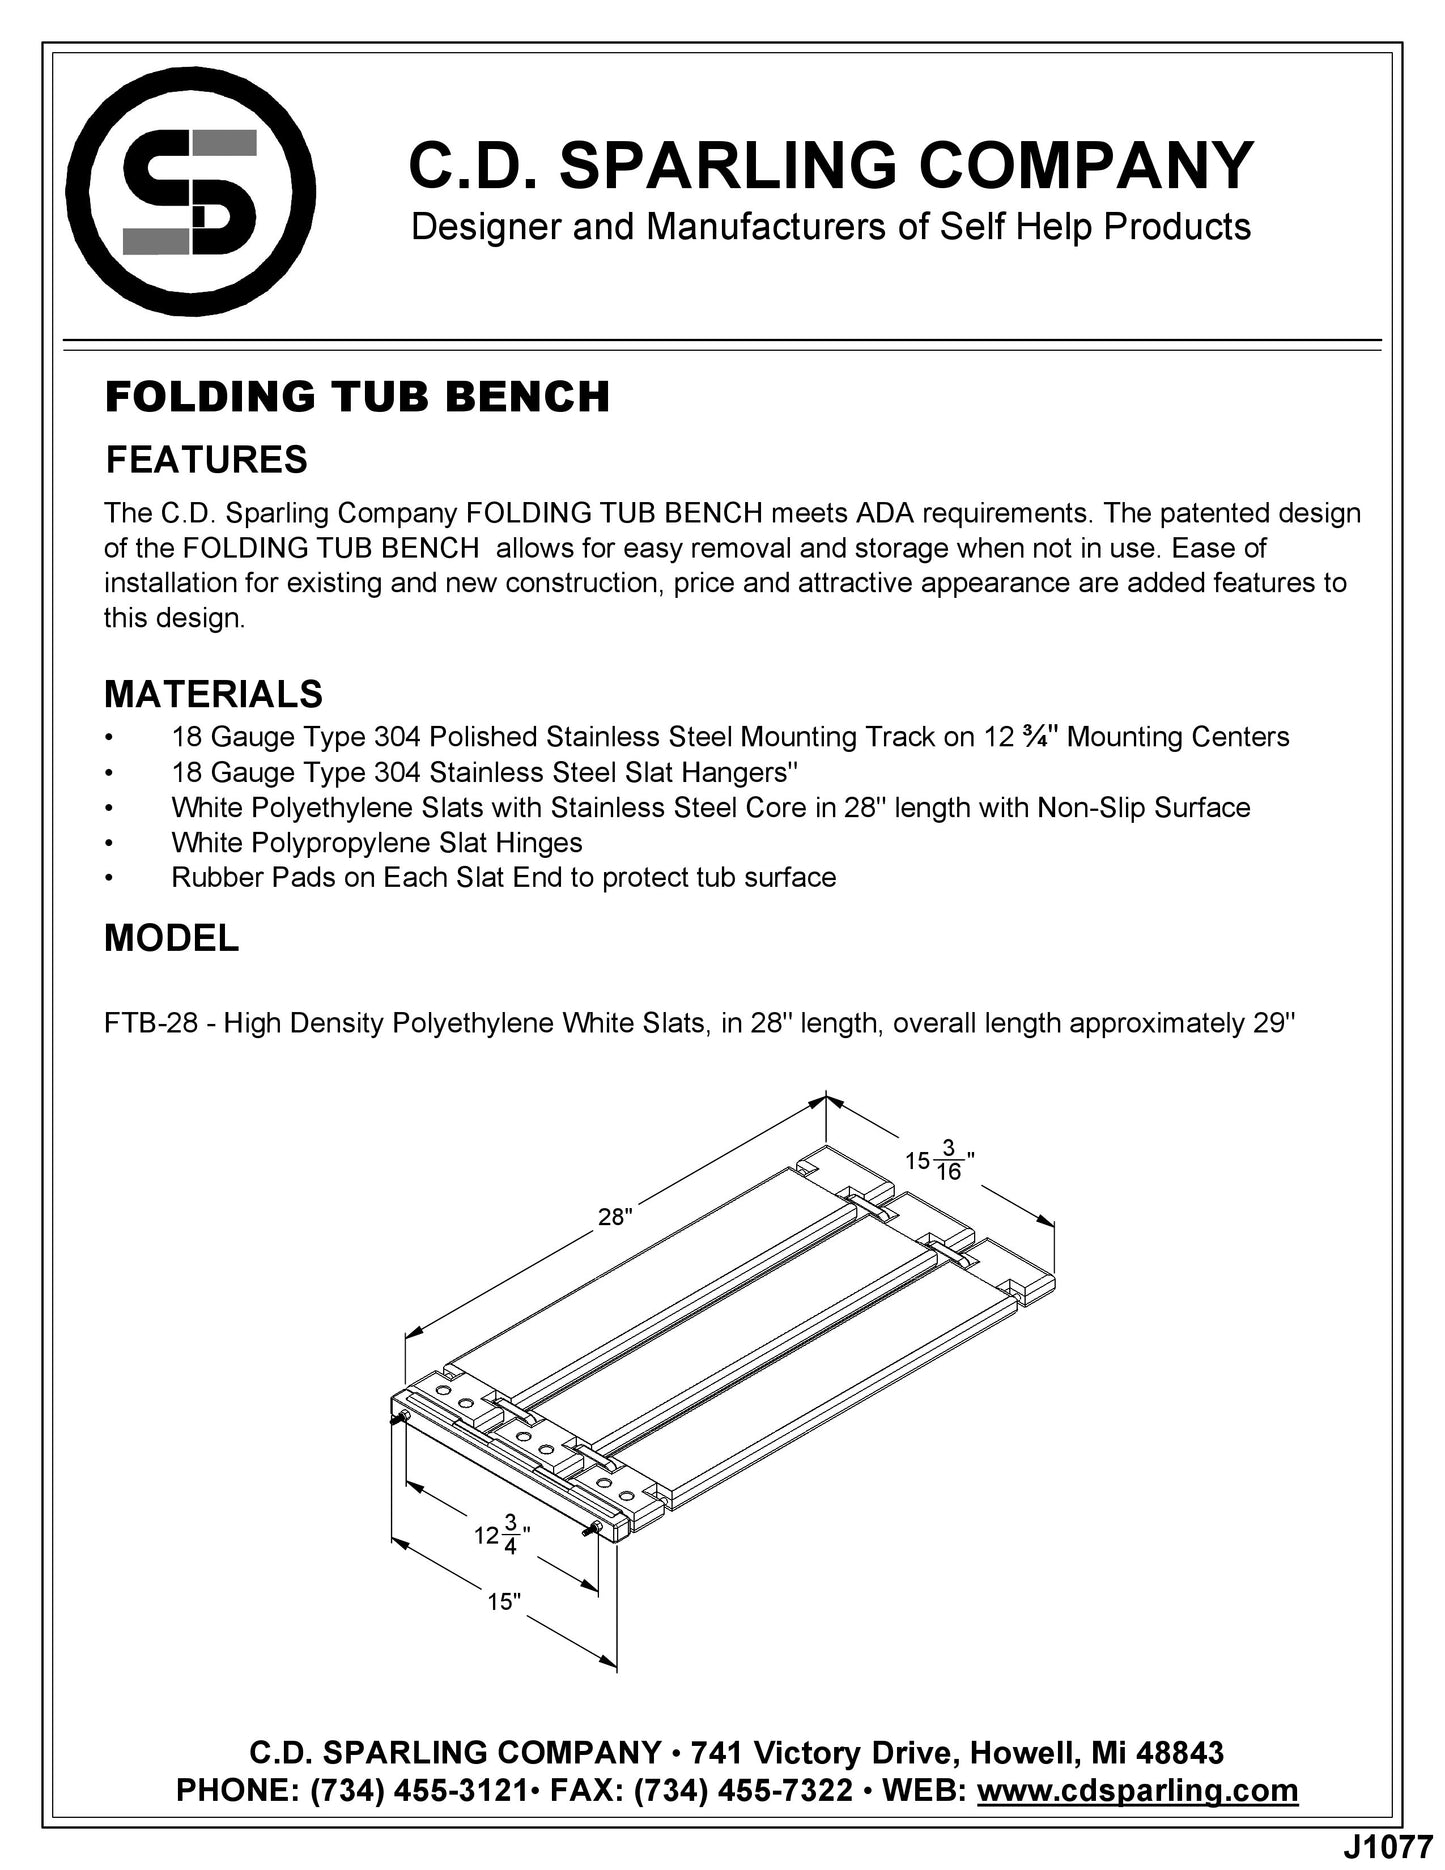 FTB-28 Sparling Folding Tub Bench